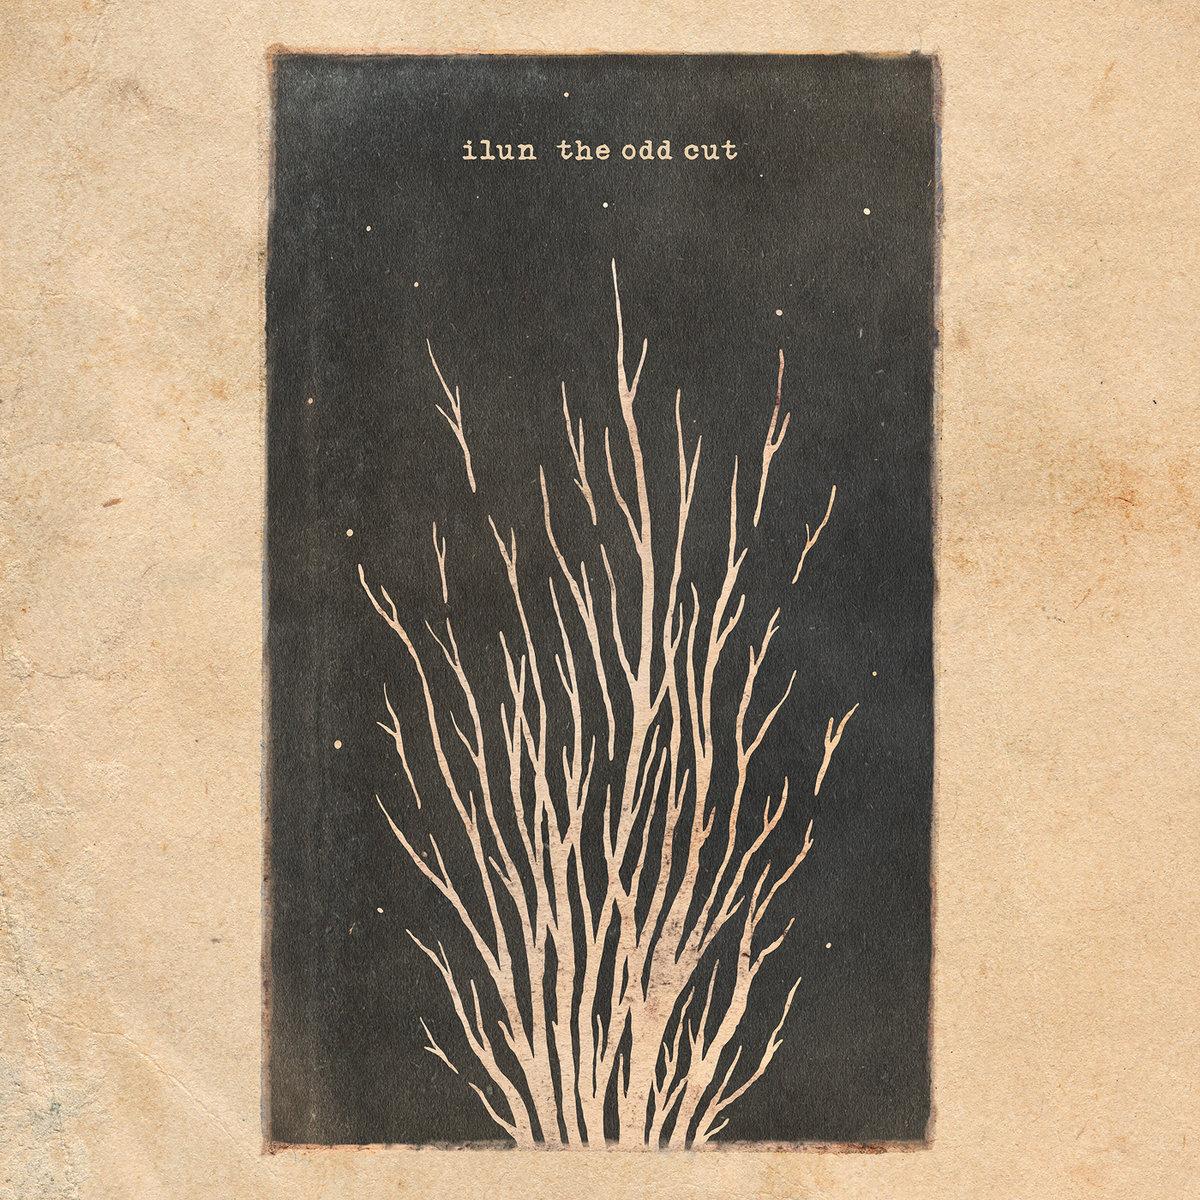 Ilun - Album The Odd Cut